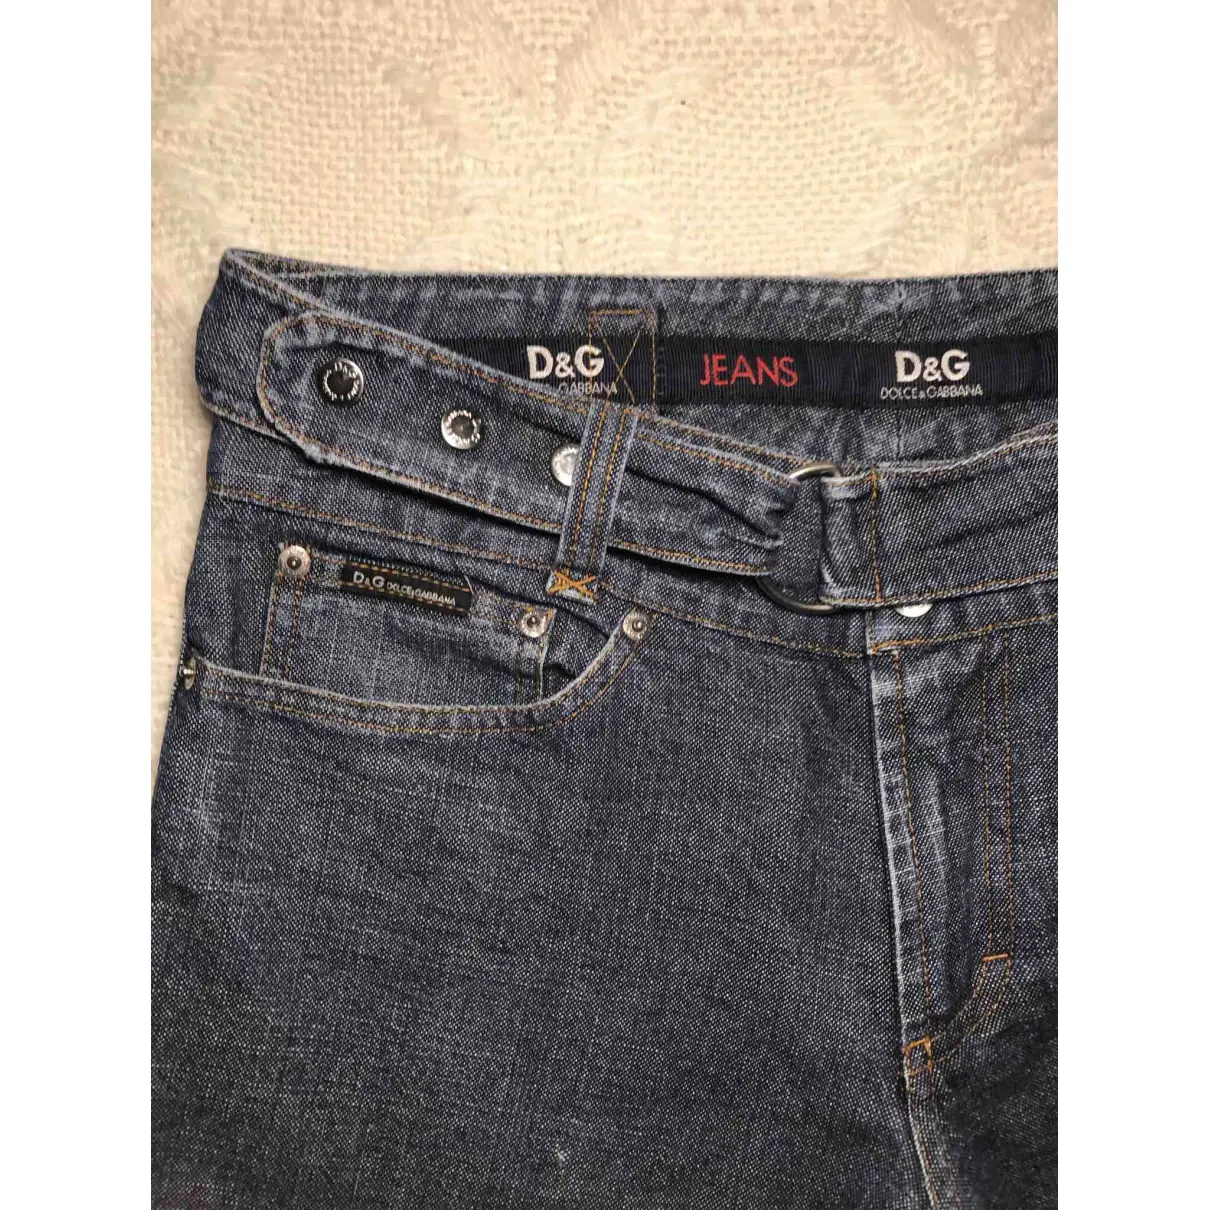 Large jeans D&G - Vintage